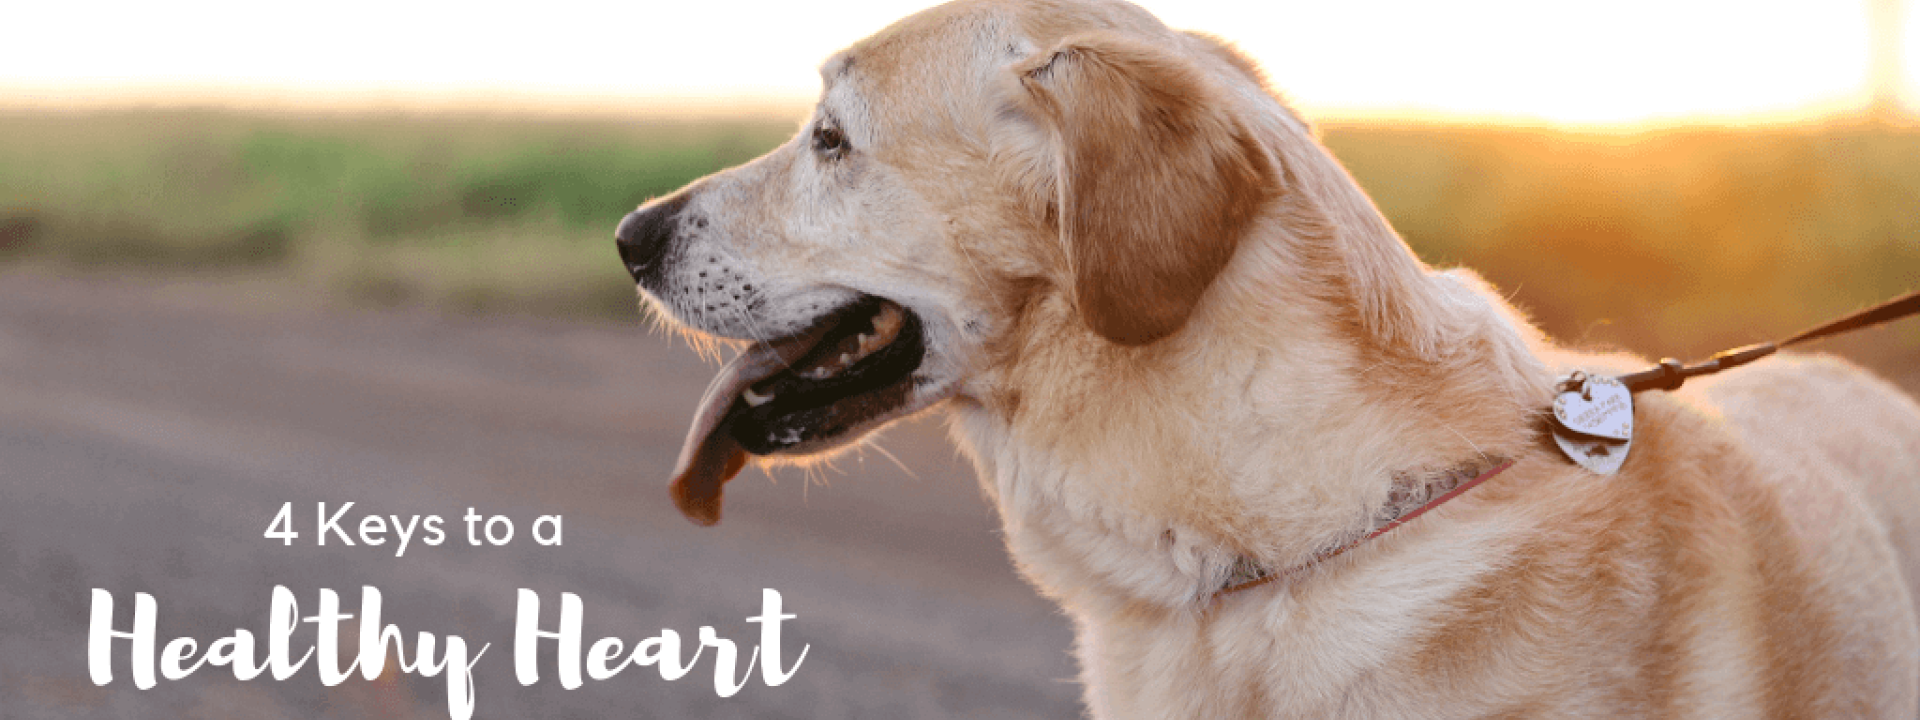 Healthy-heart-blog-header.png